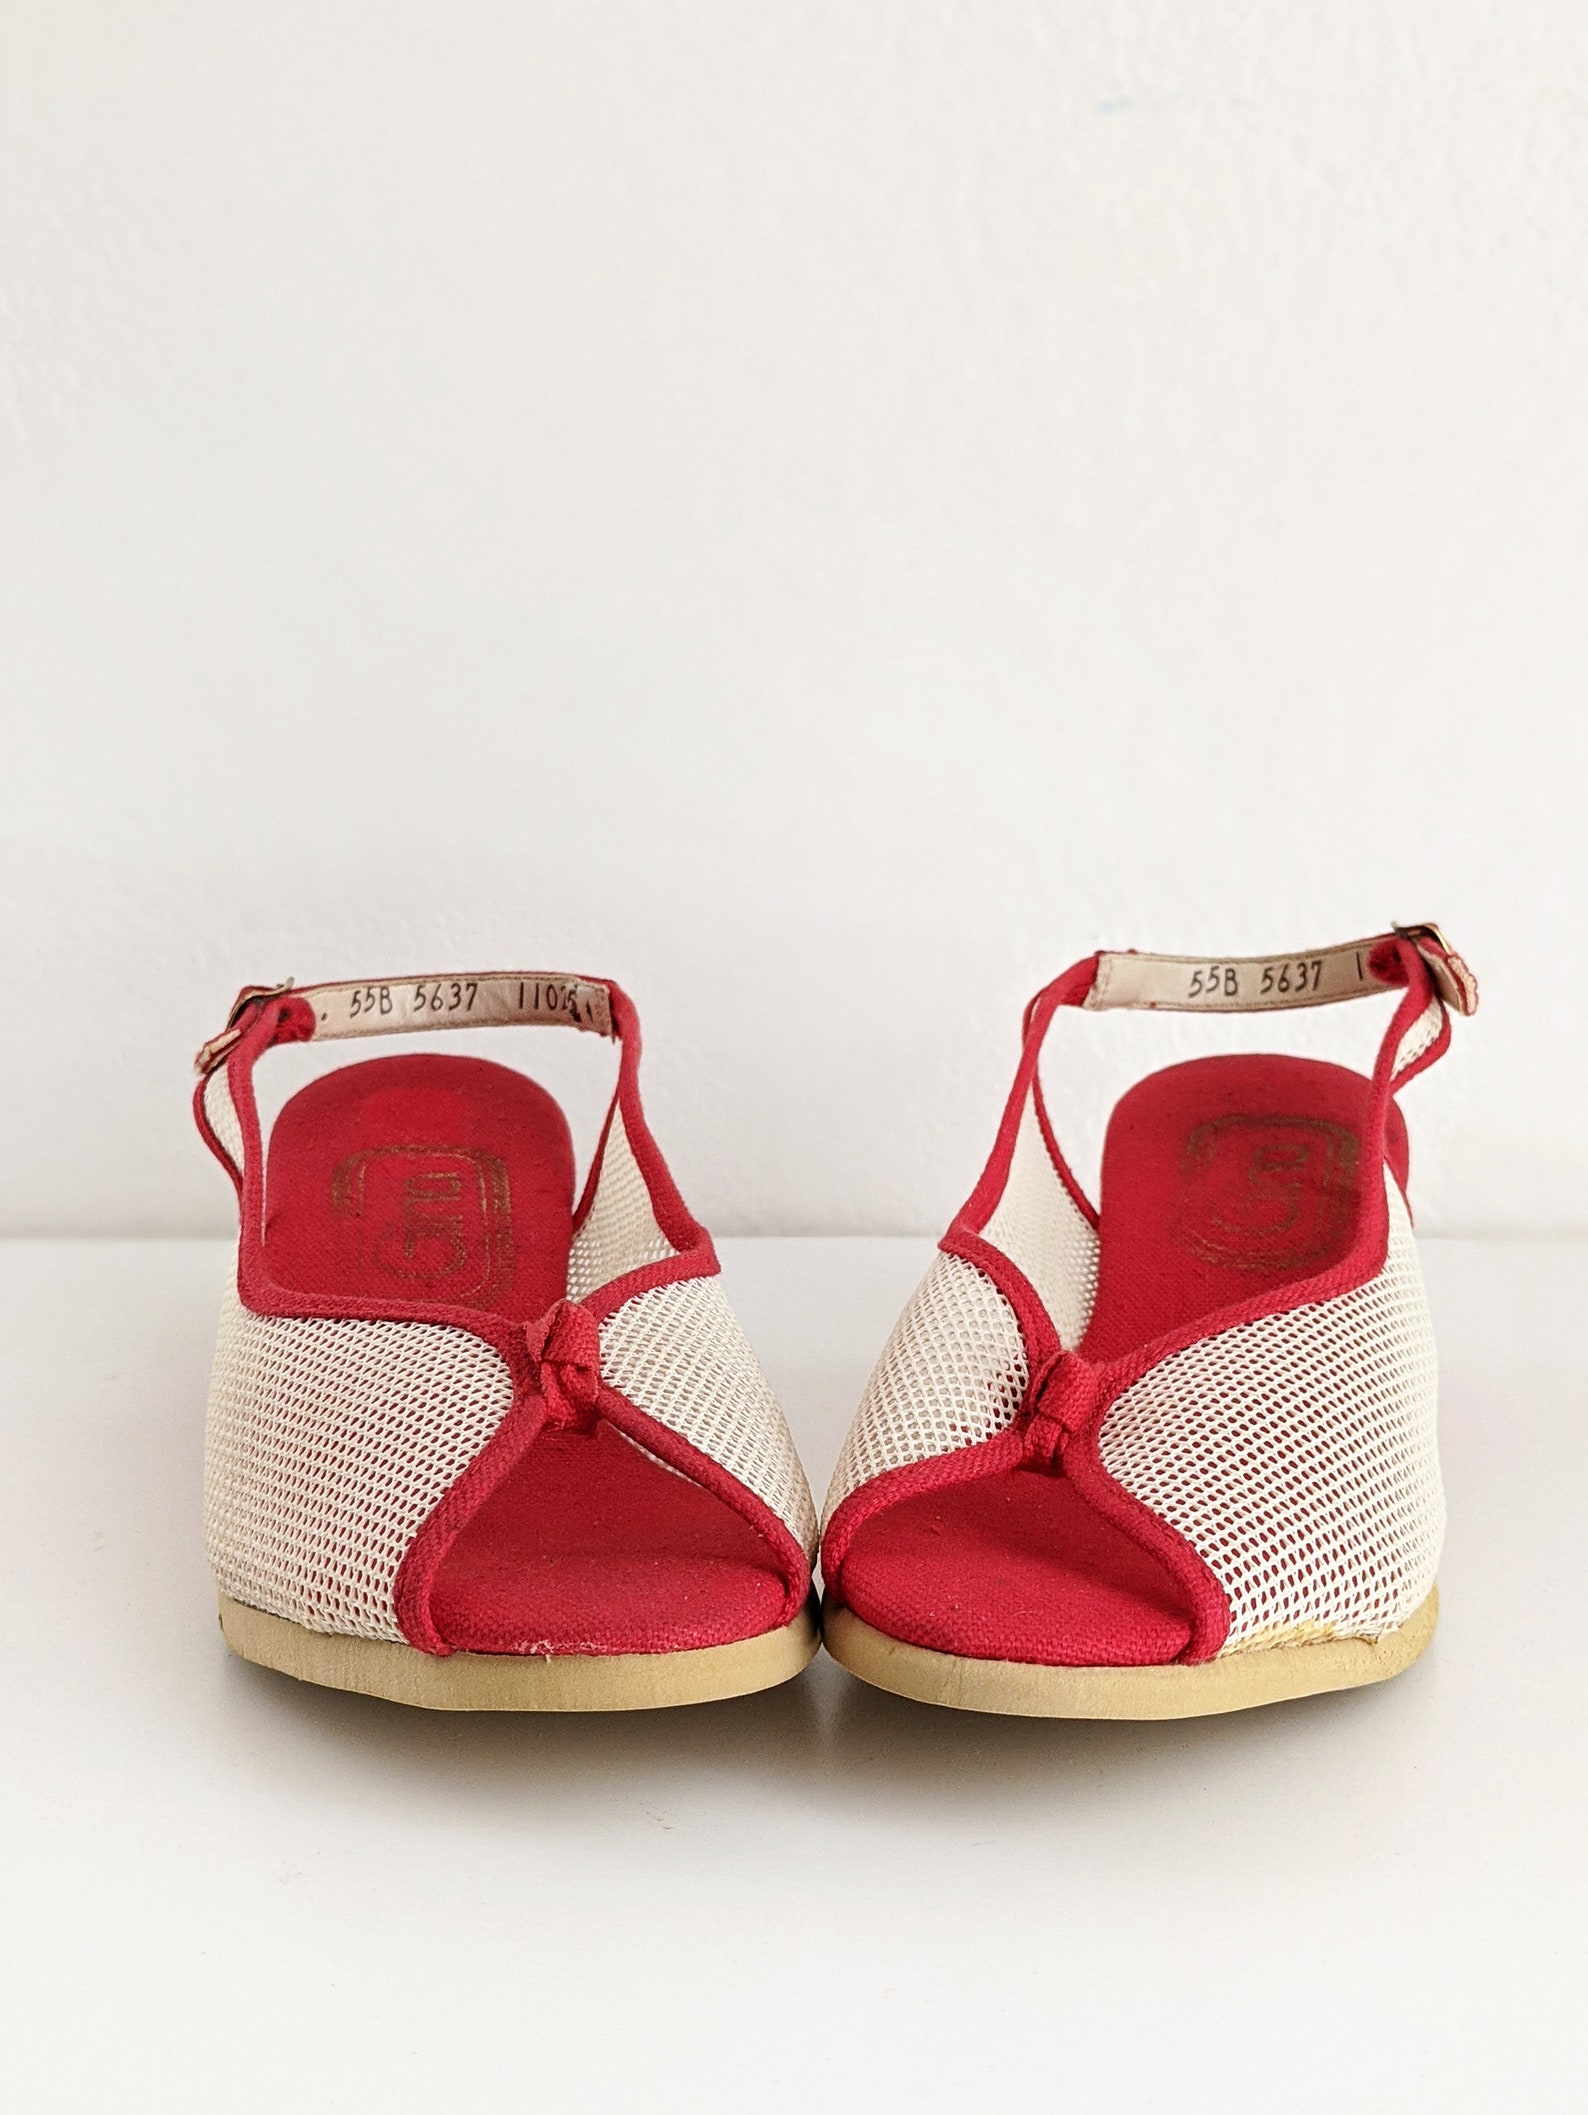 Vintage Red Slingbacks 70s Mesh Wedge Sandals Size 5.5 B - Etsy